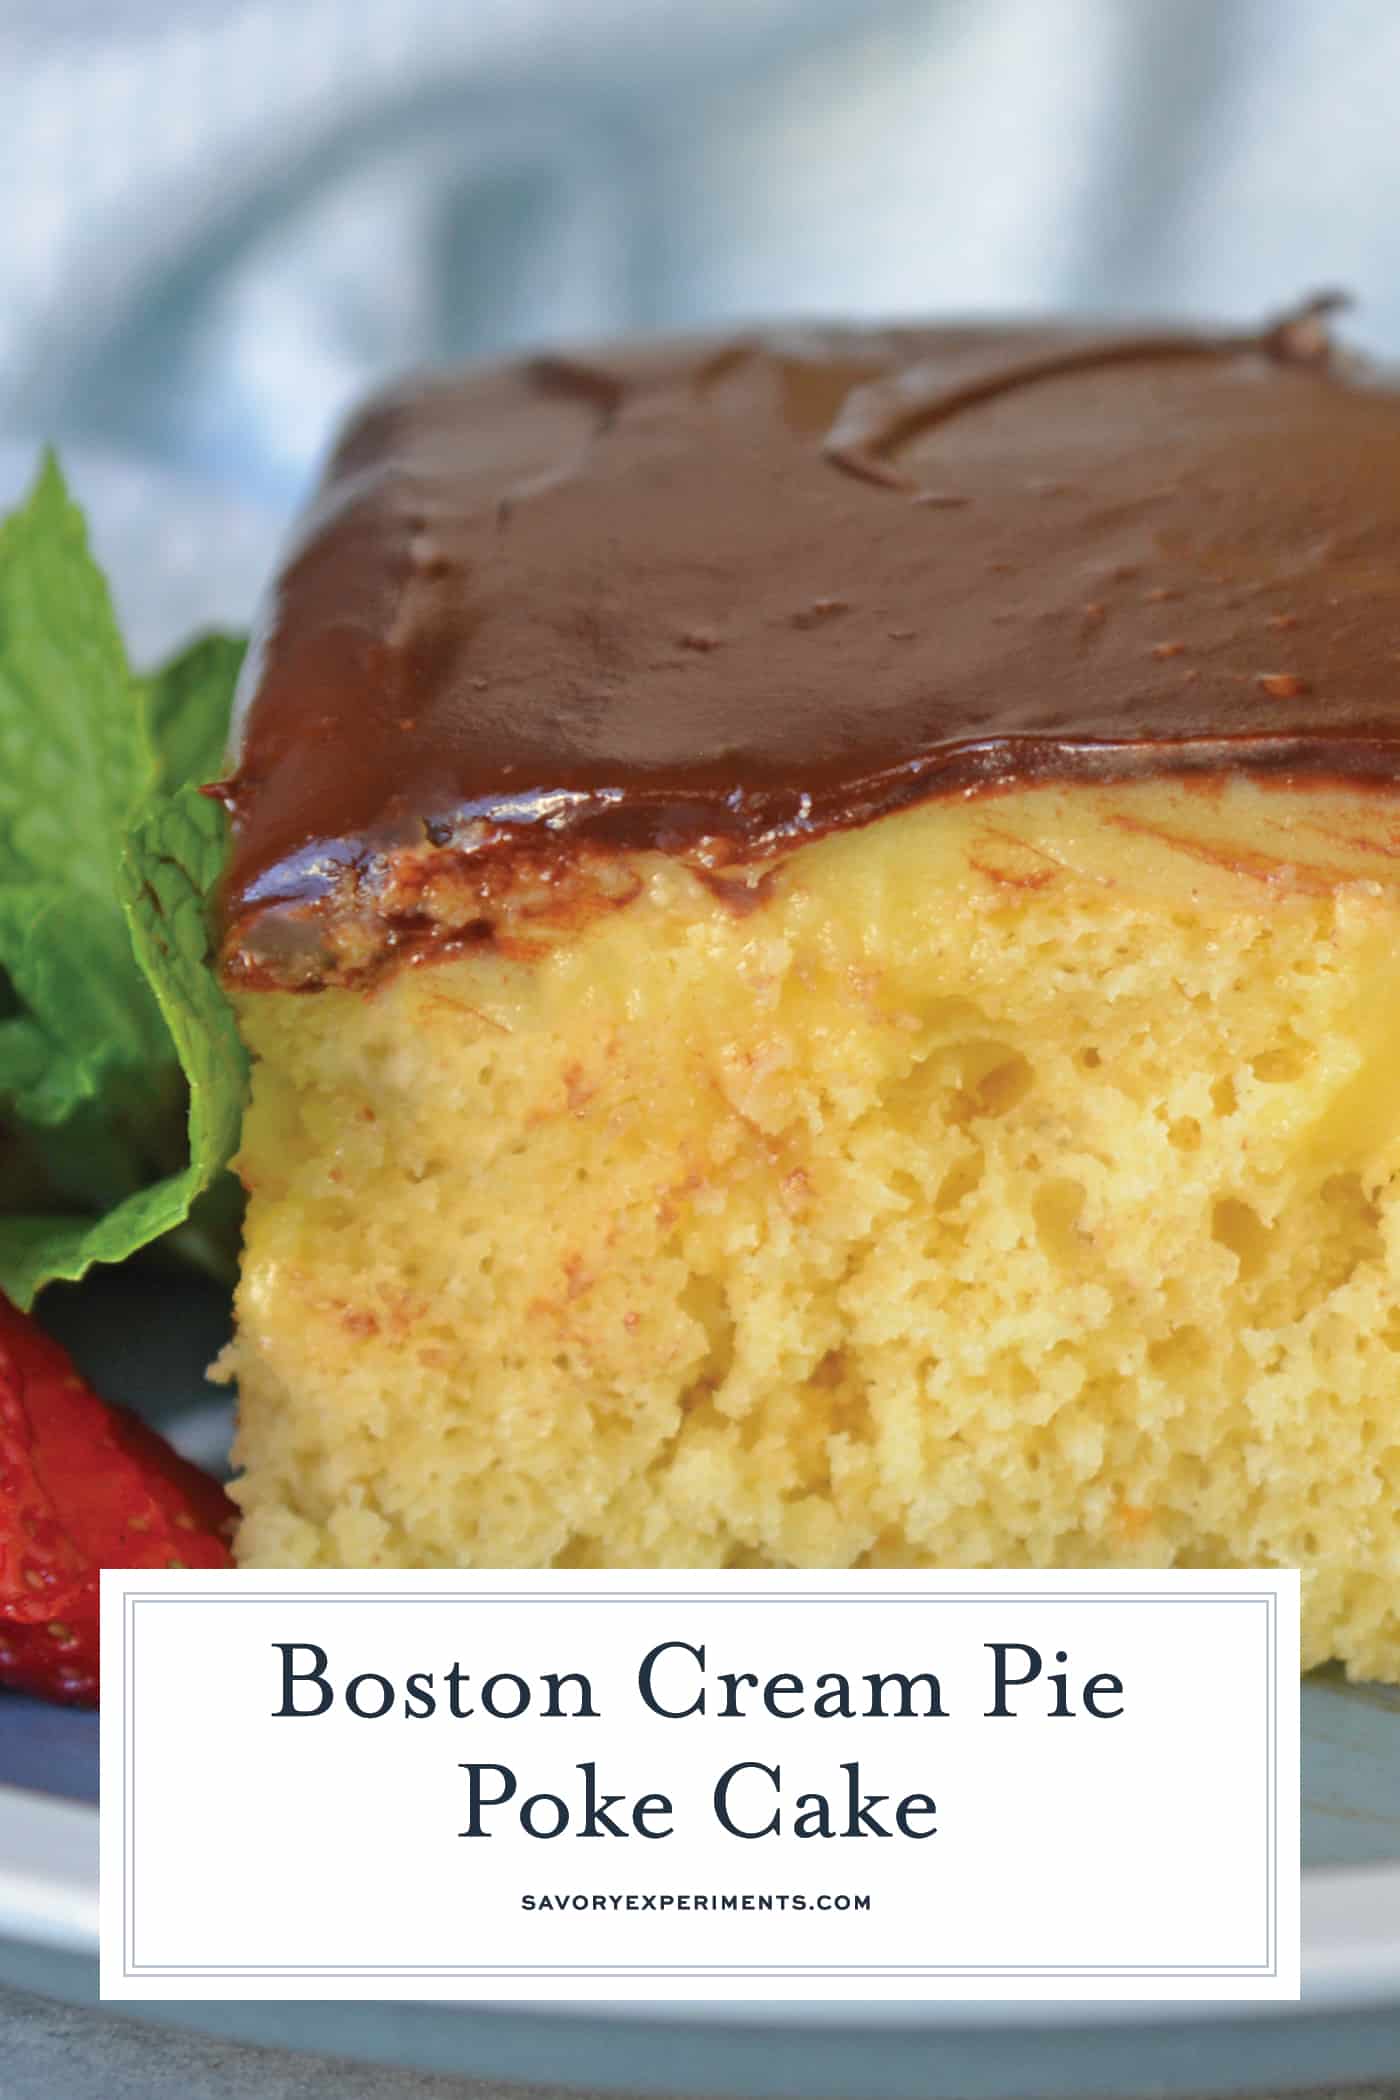 Slice of Boston Cream Pie